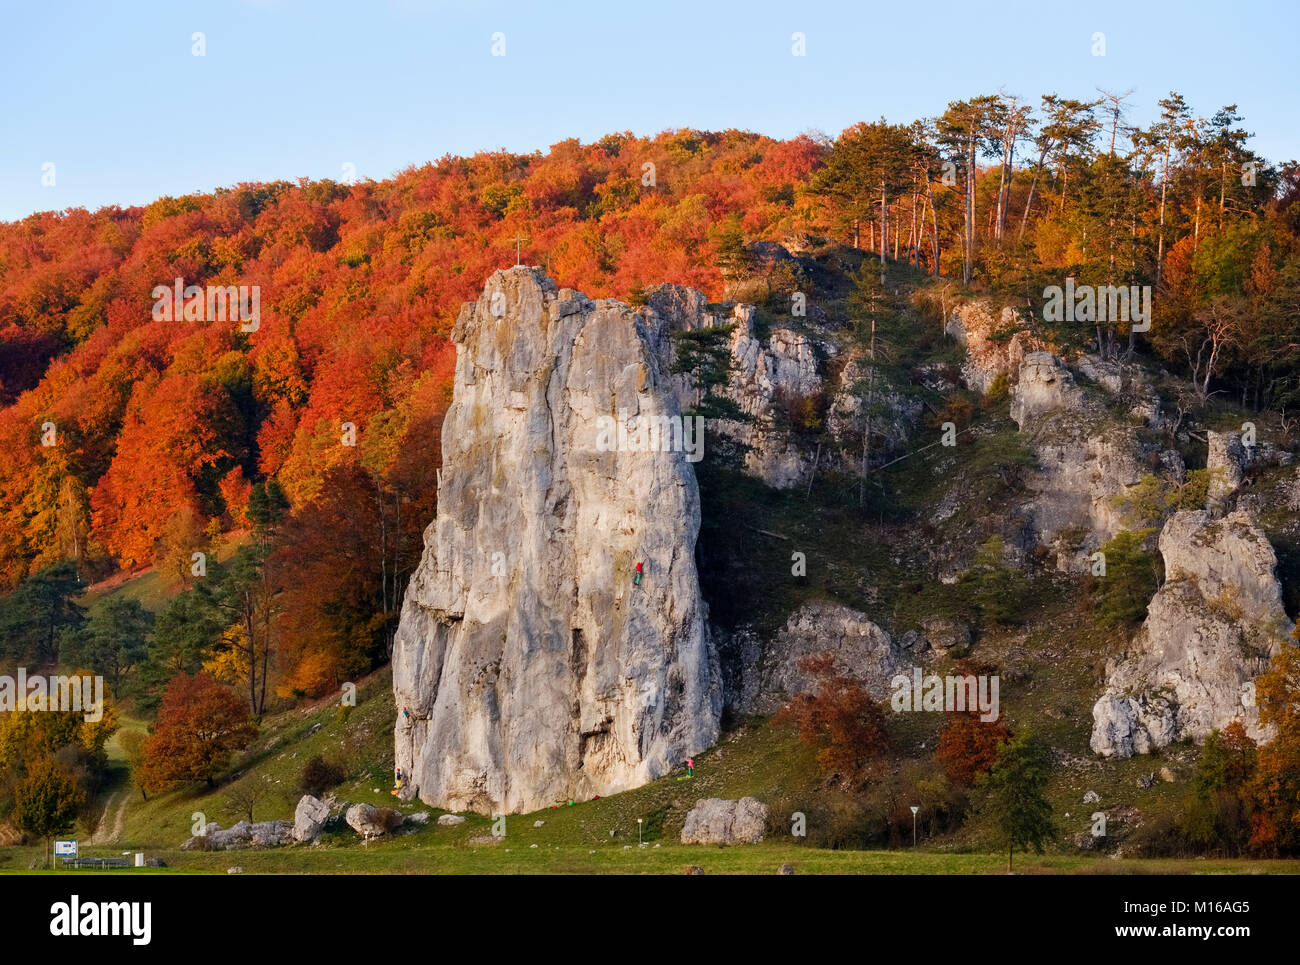 Burgstein Rock near Dollnstein, autumn colouring, Altmühltal, Upper Bavaria, Bavaria, Germany Stock Photo